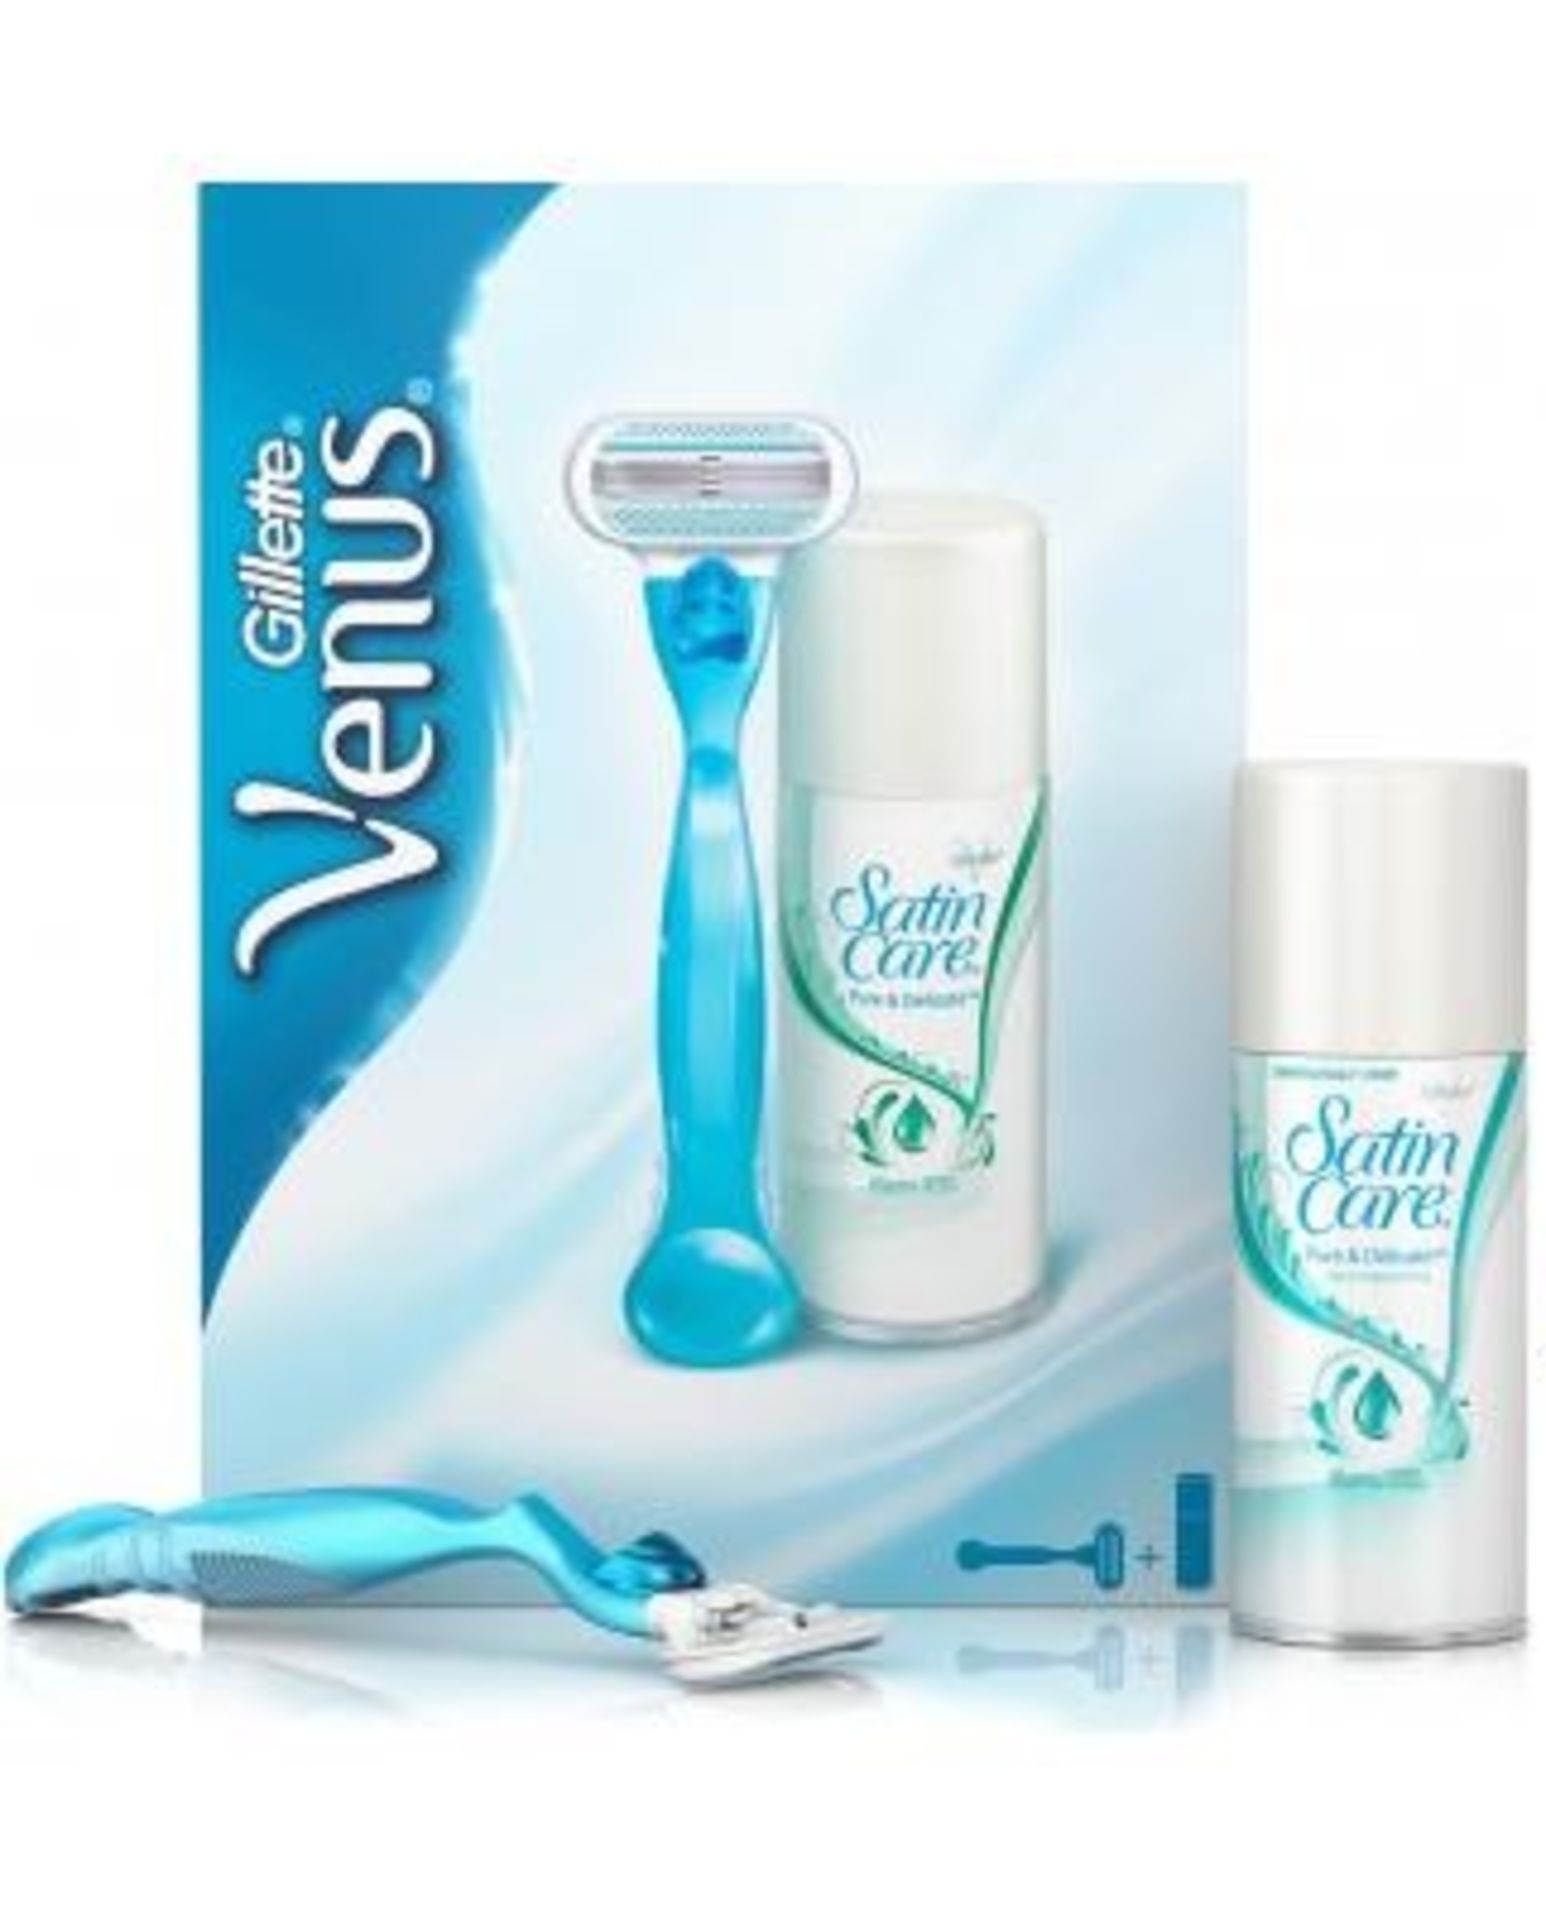 V Brand New Gillette Venus Satin Care Pure & Delicate Set With Razor And Shave Gel X 2 YOUR BID